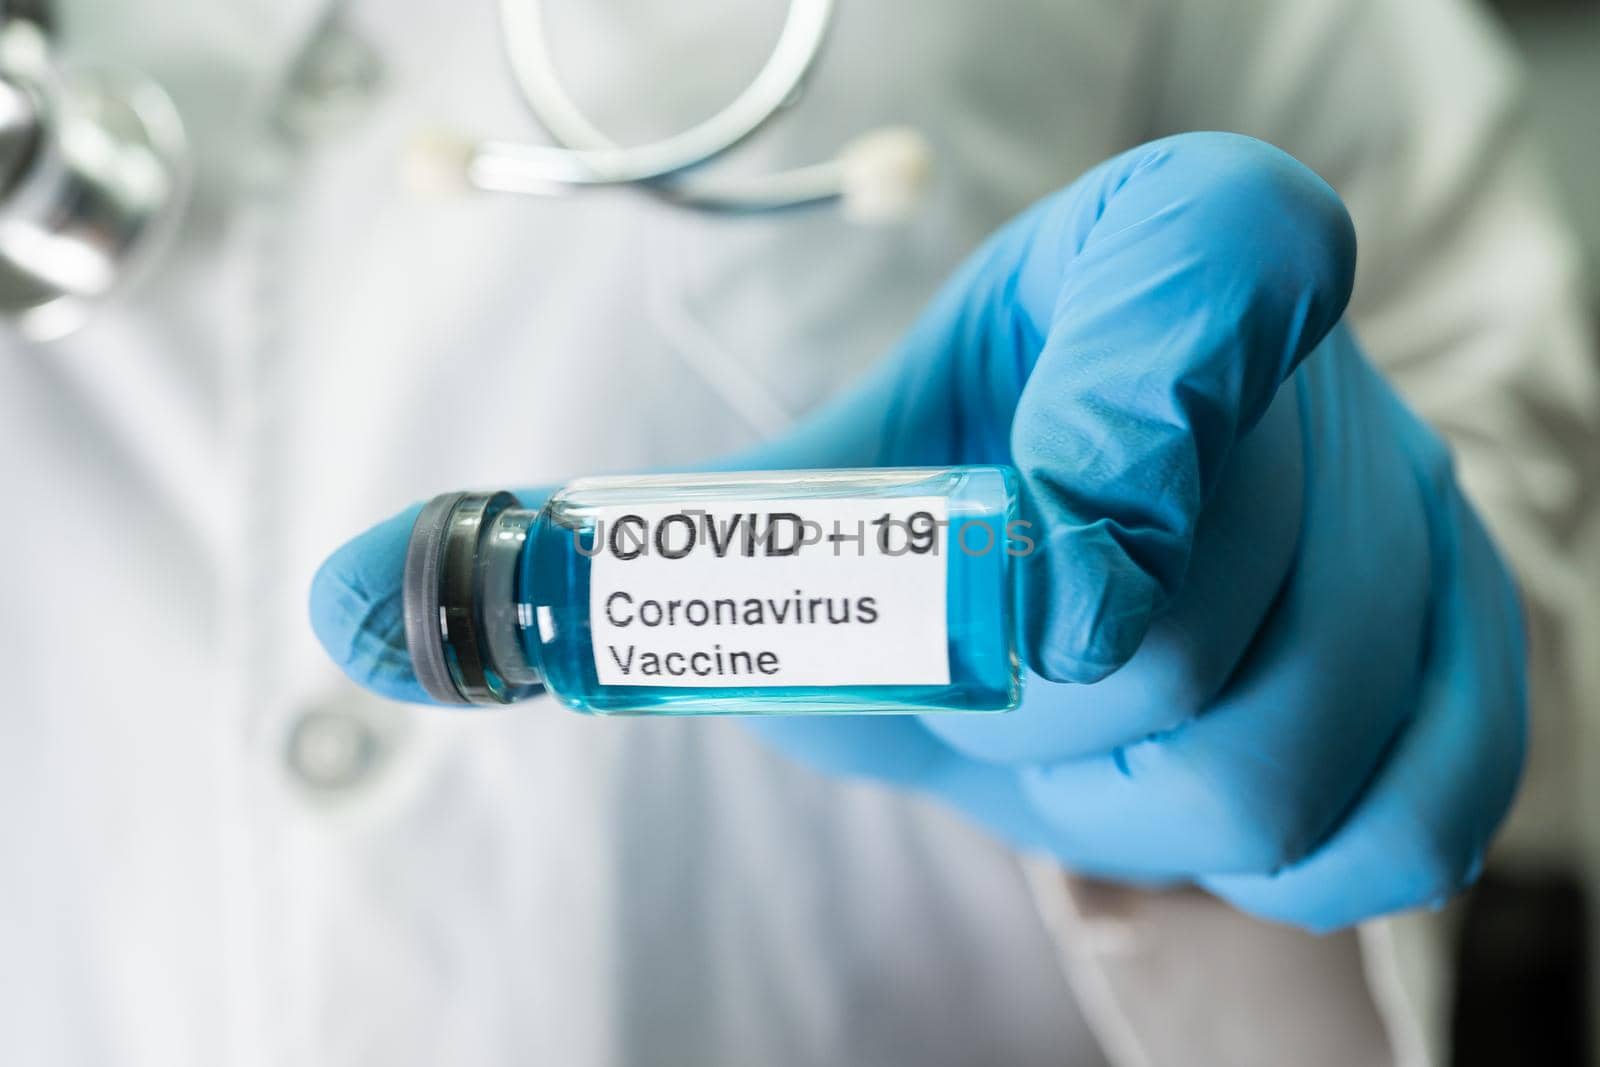 Coronavirus Covid-19 vaccine development medical with syringe for doctor use to treat pneumonia illness patients.